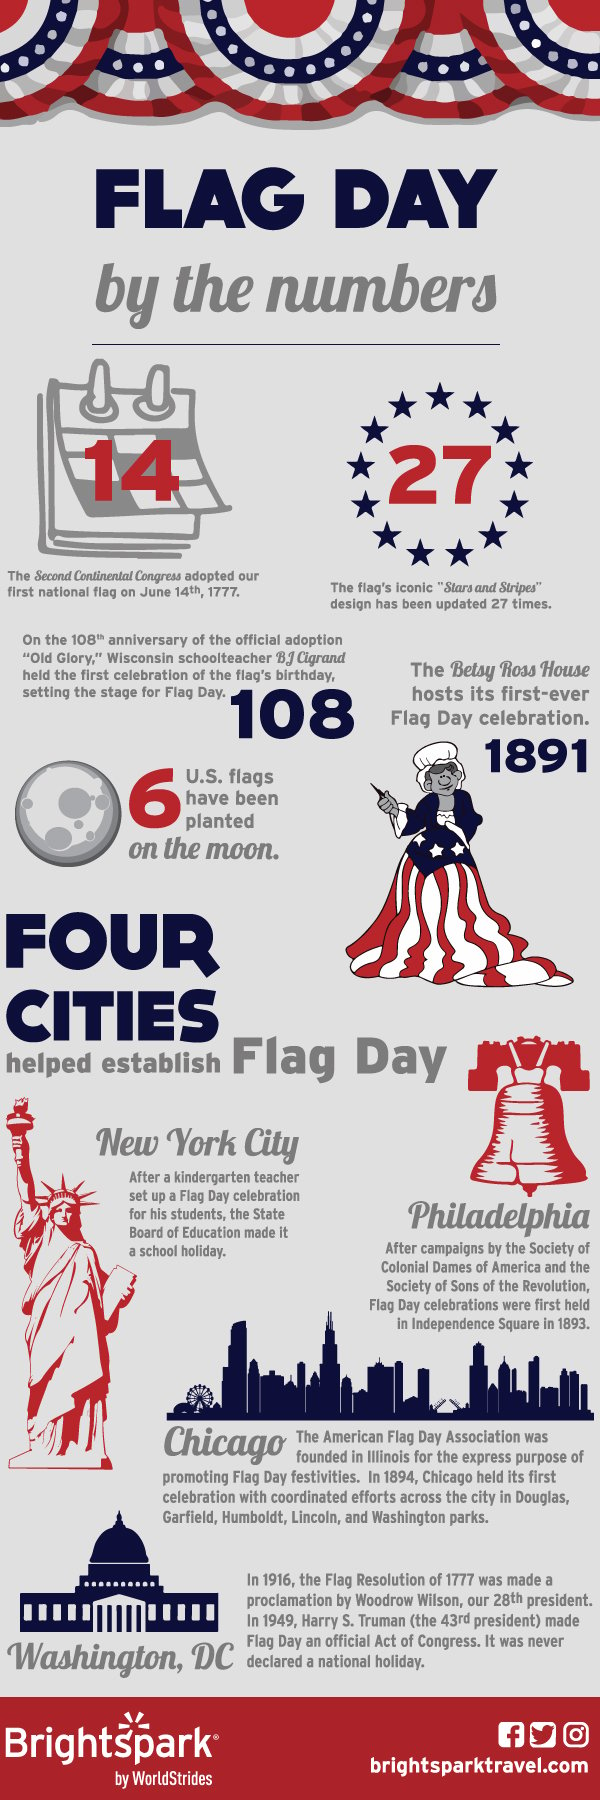 flag-day-fun-facts-for-kids-pelajaran